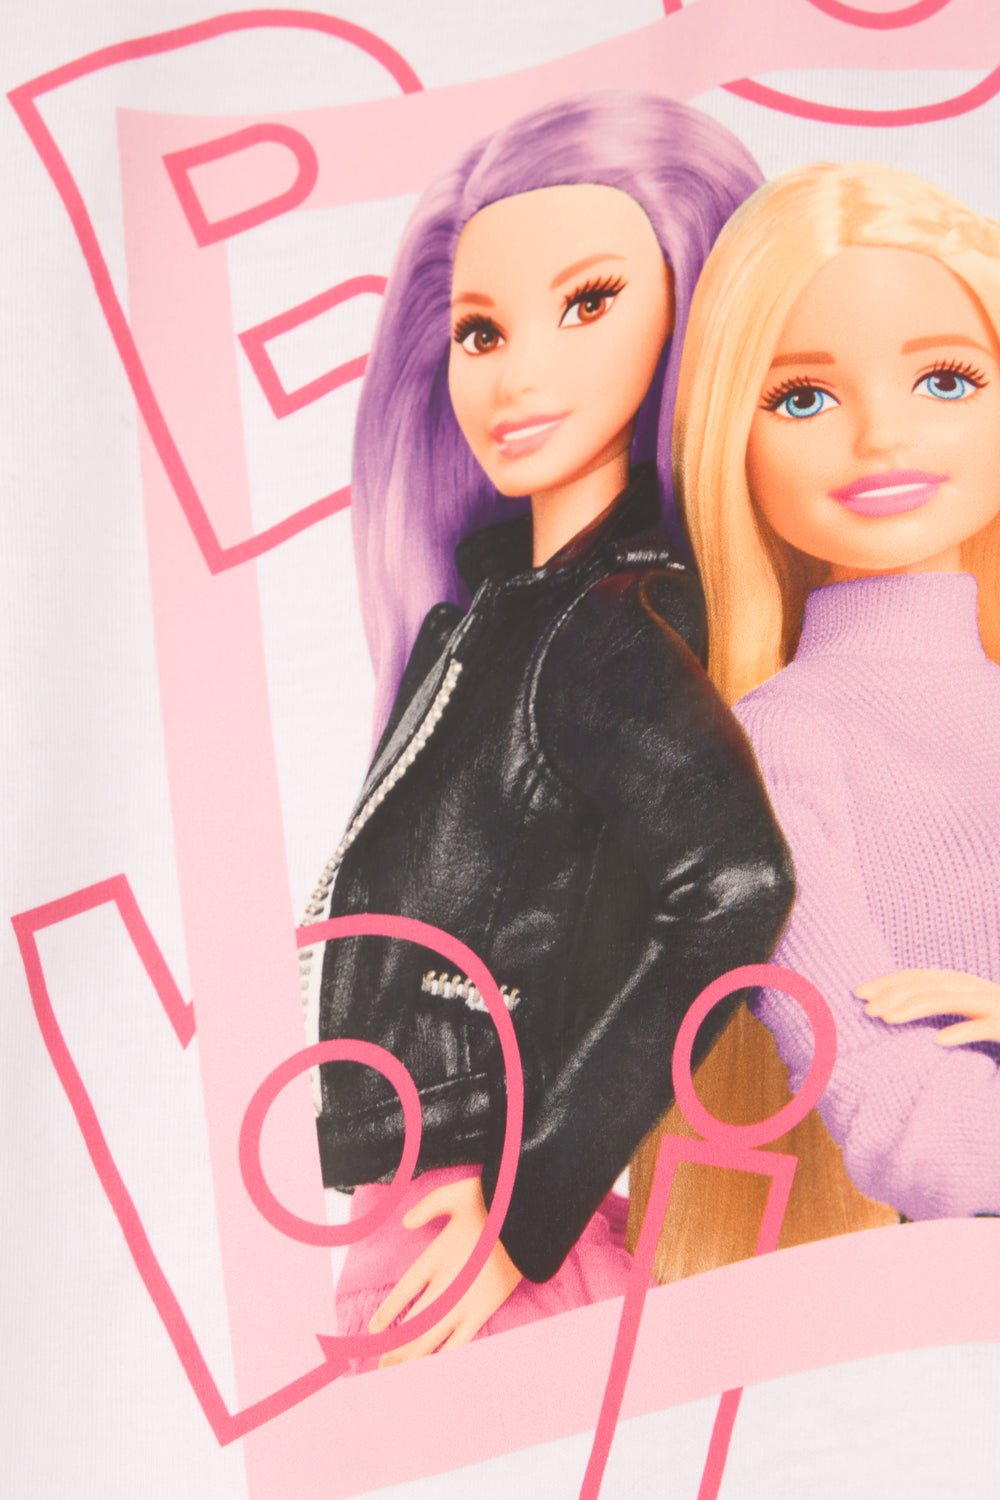 Barbie Girls Pyjamas Long Sleeved Kids Pyjamas Set Official Merchandise - Brand Threads